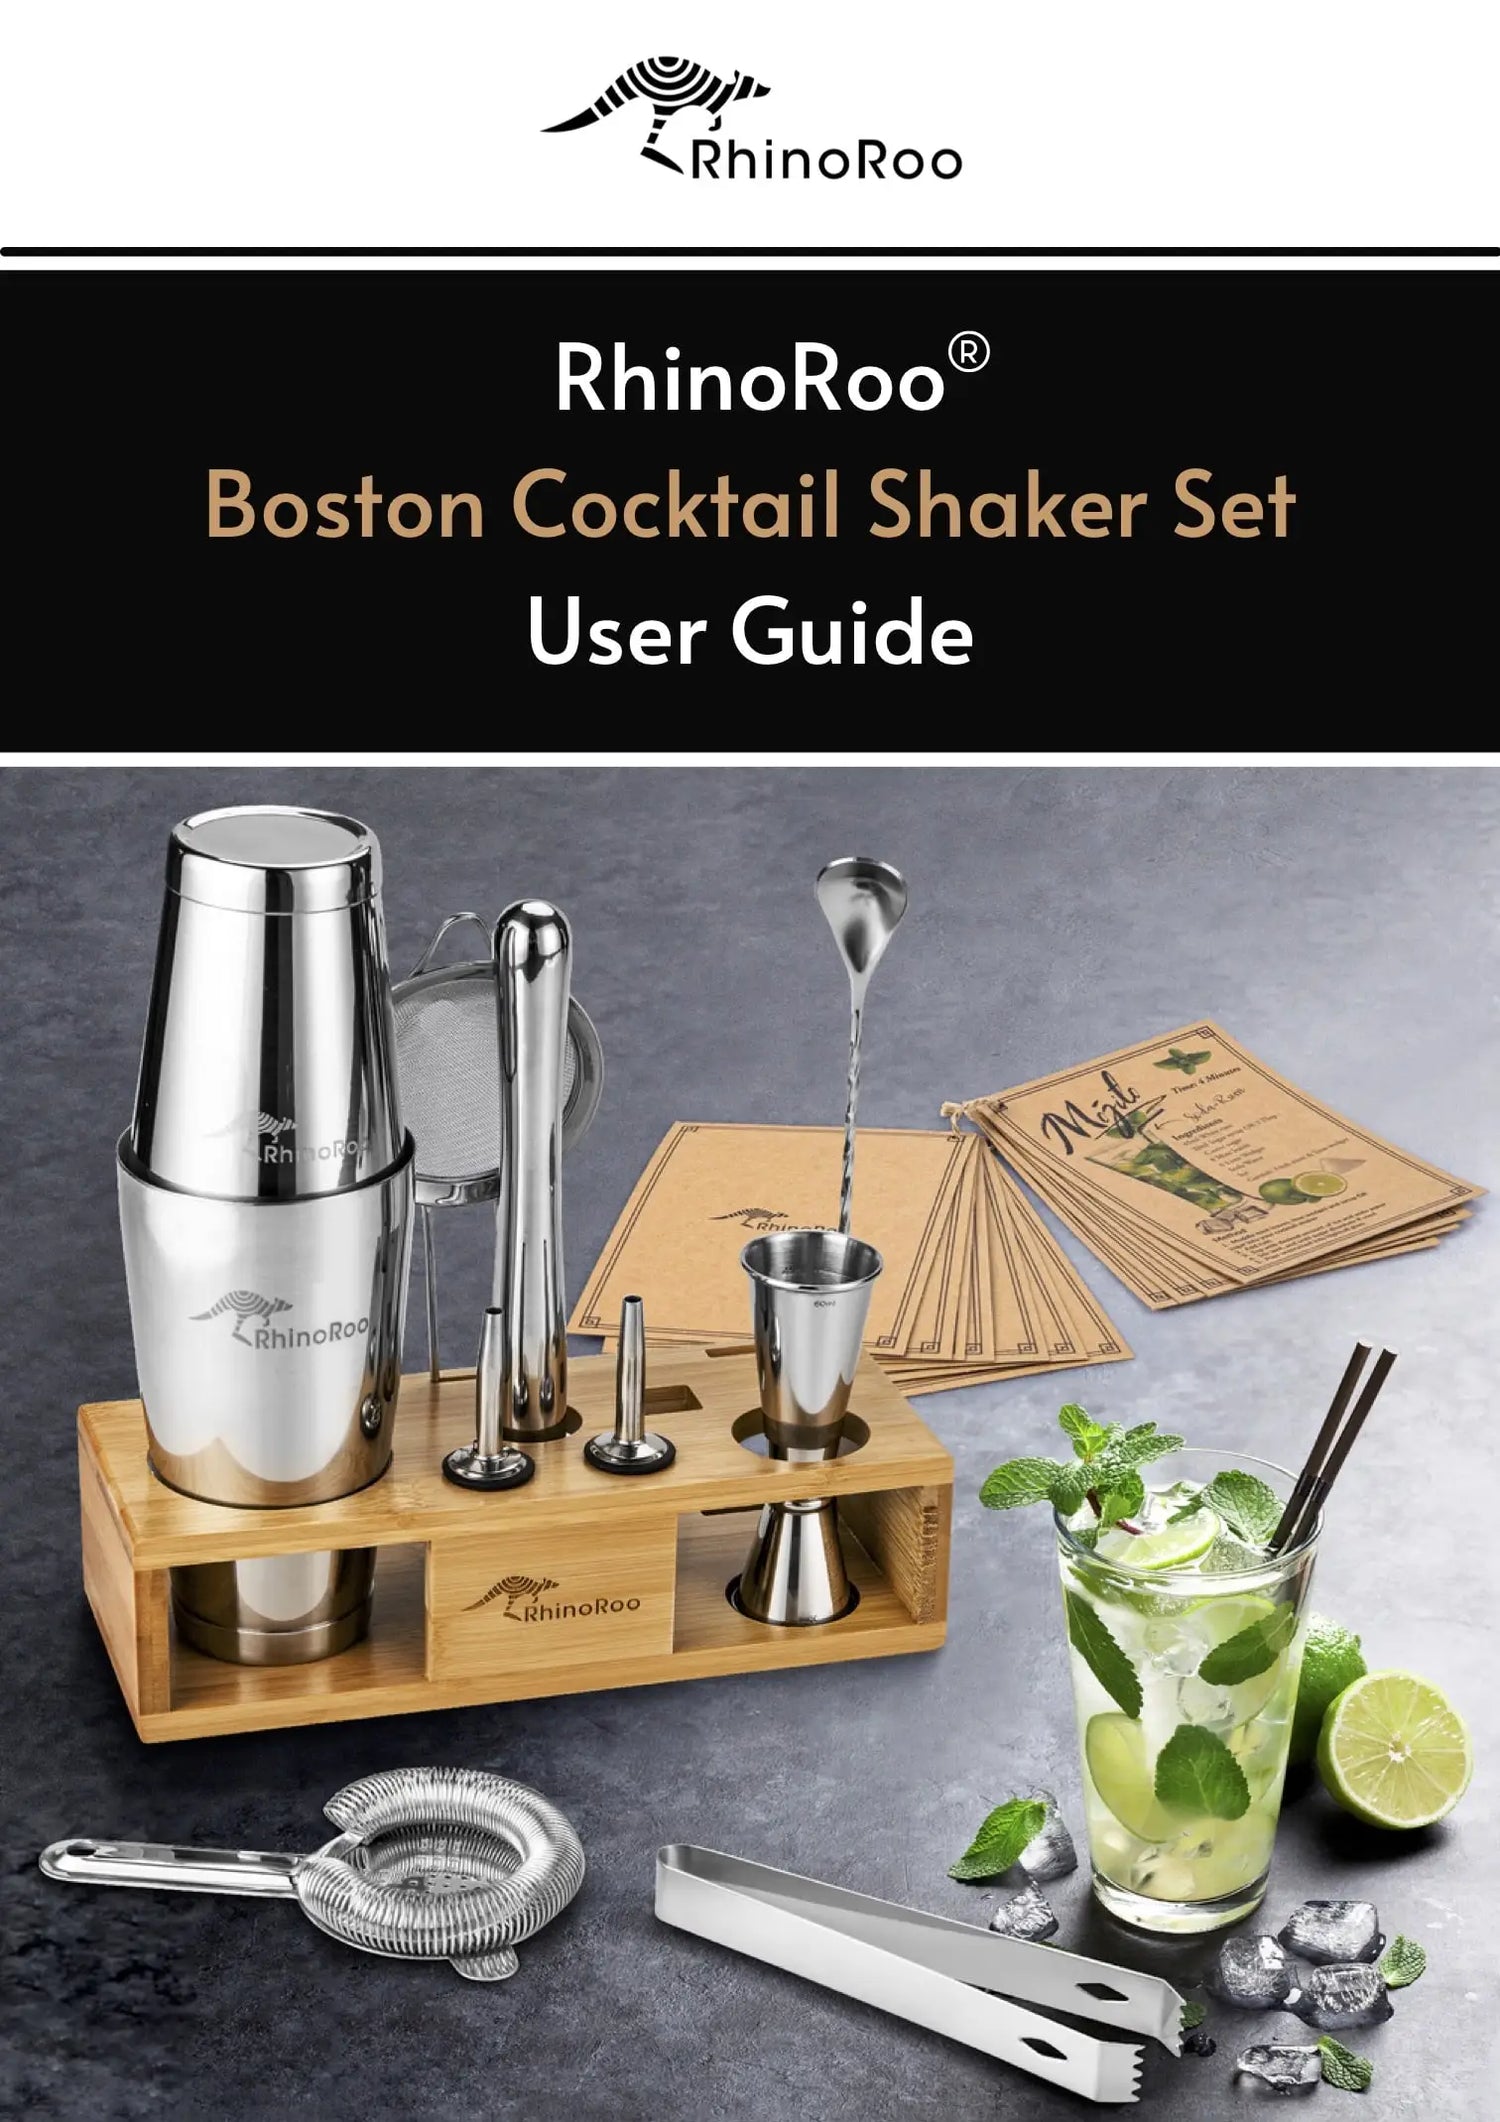 RhinoRoo Boston Cocktail Shaker Set Ebook User Guide